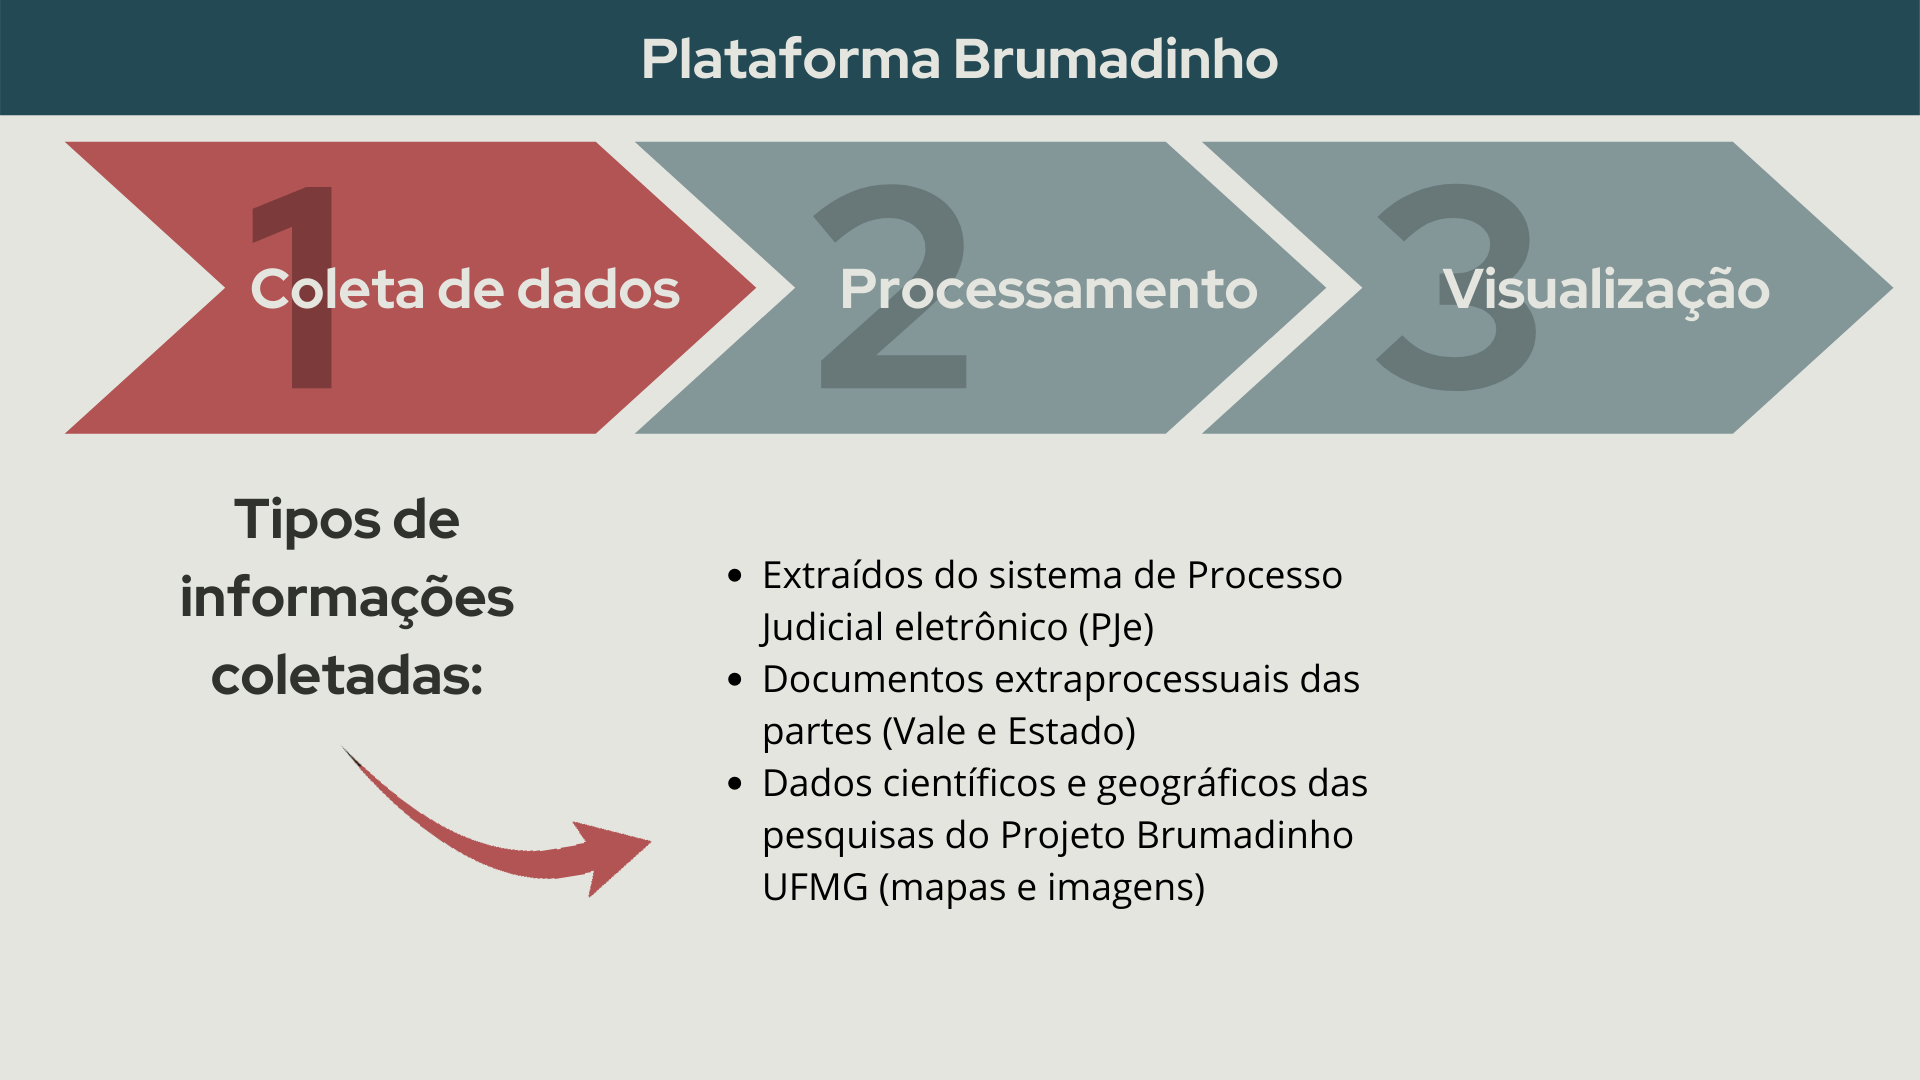 brumadinho platform steps